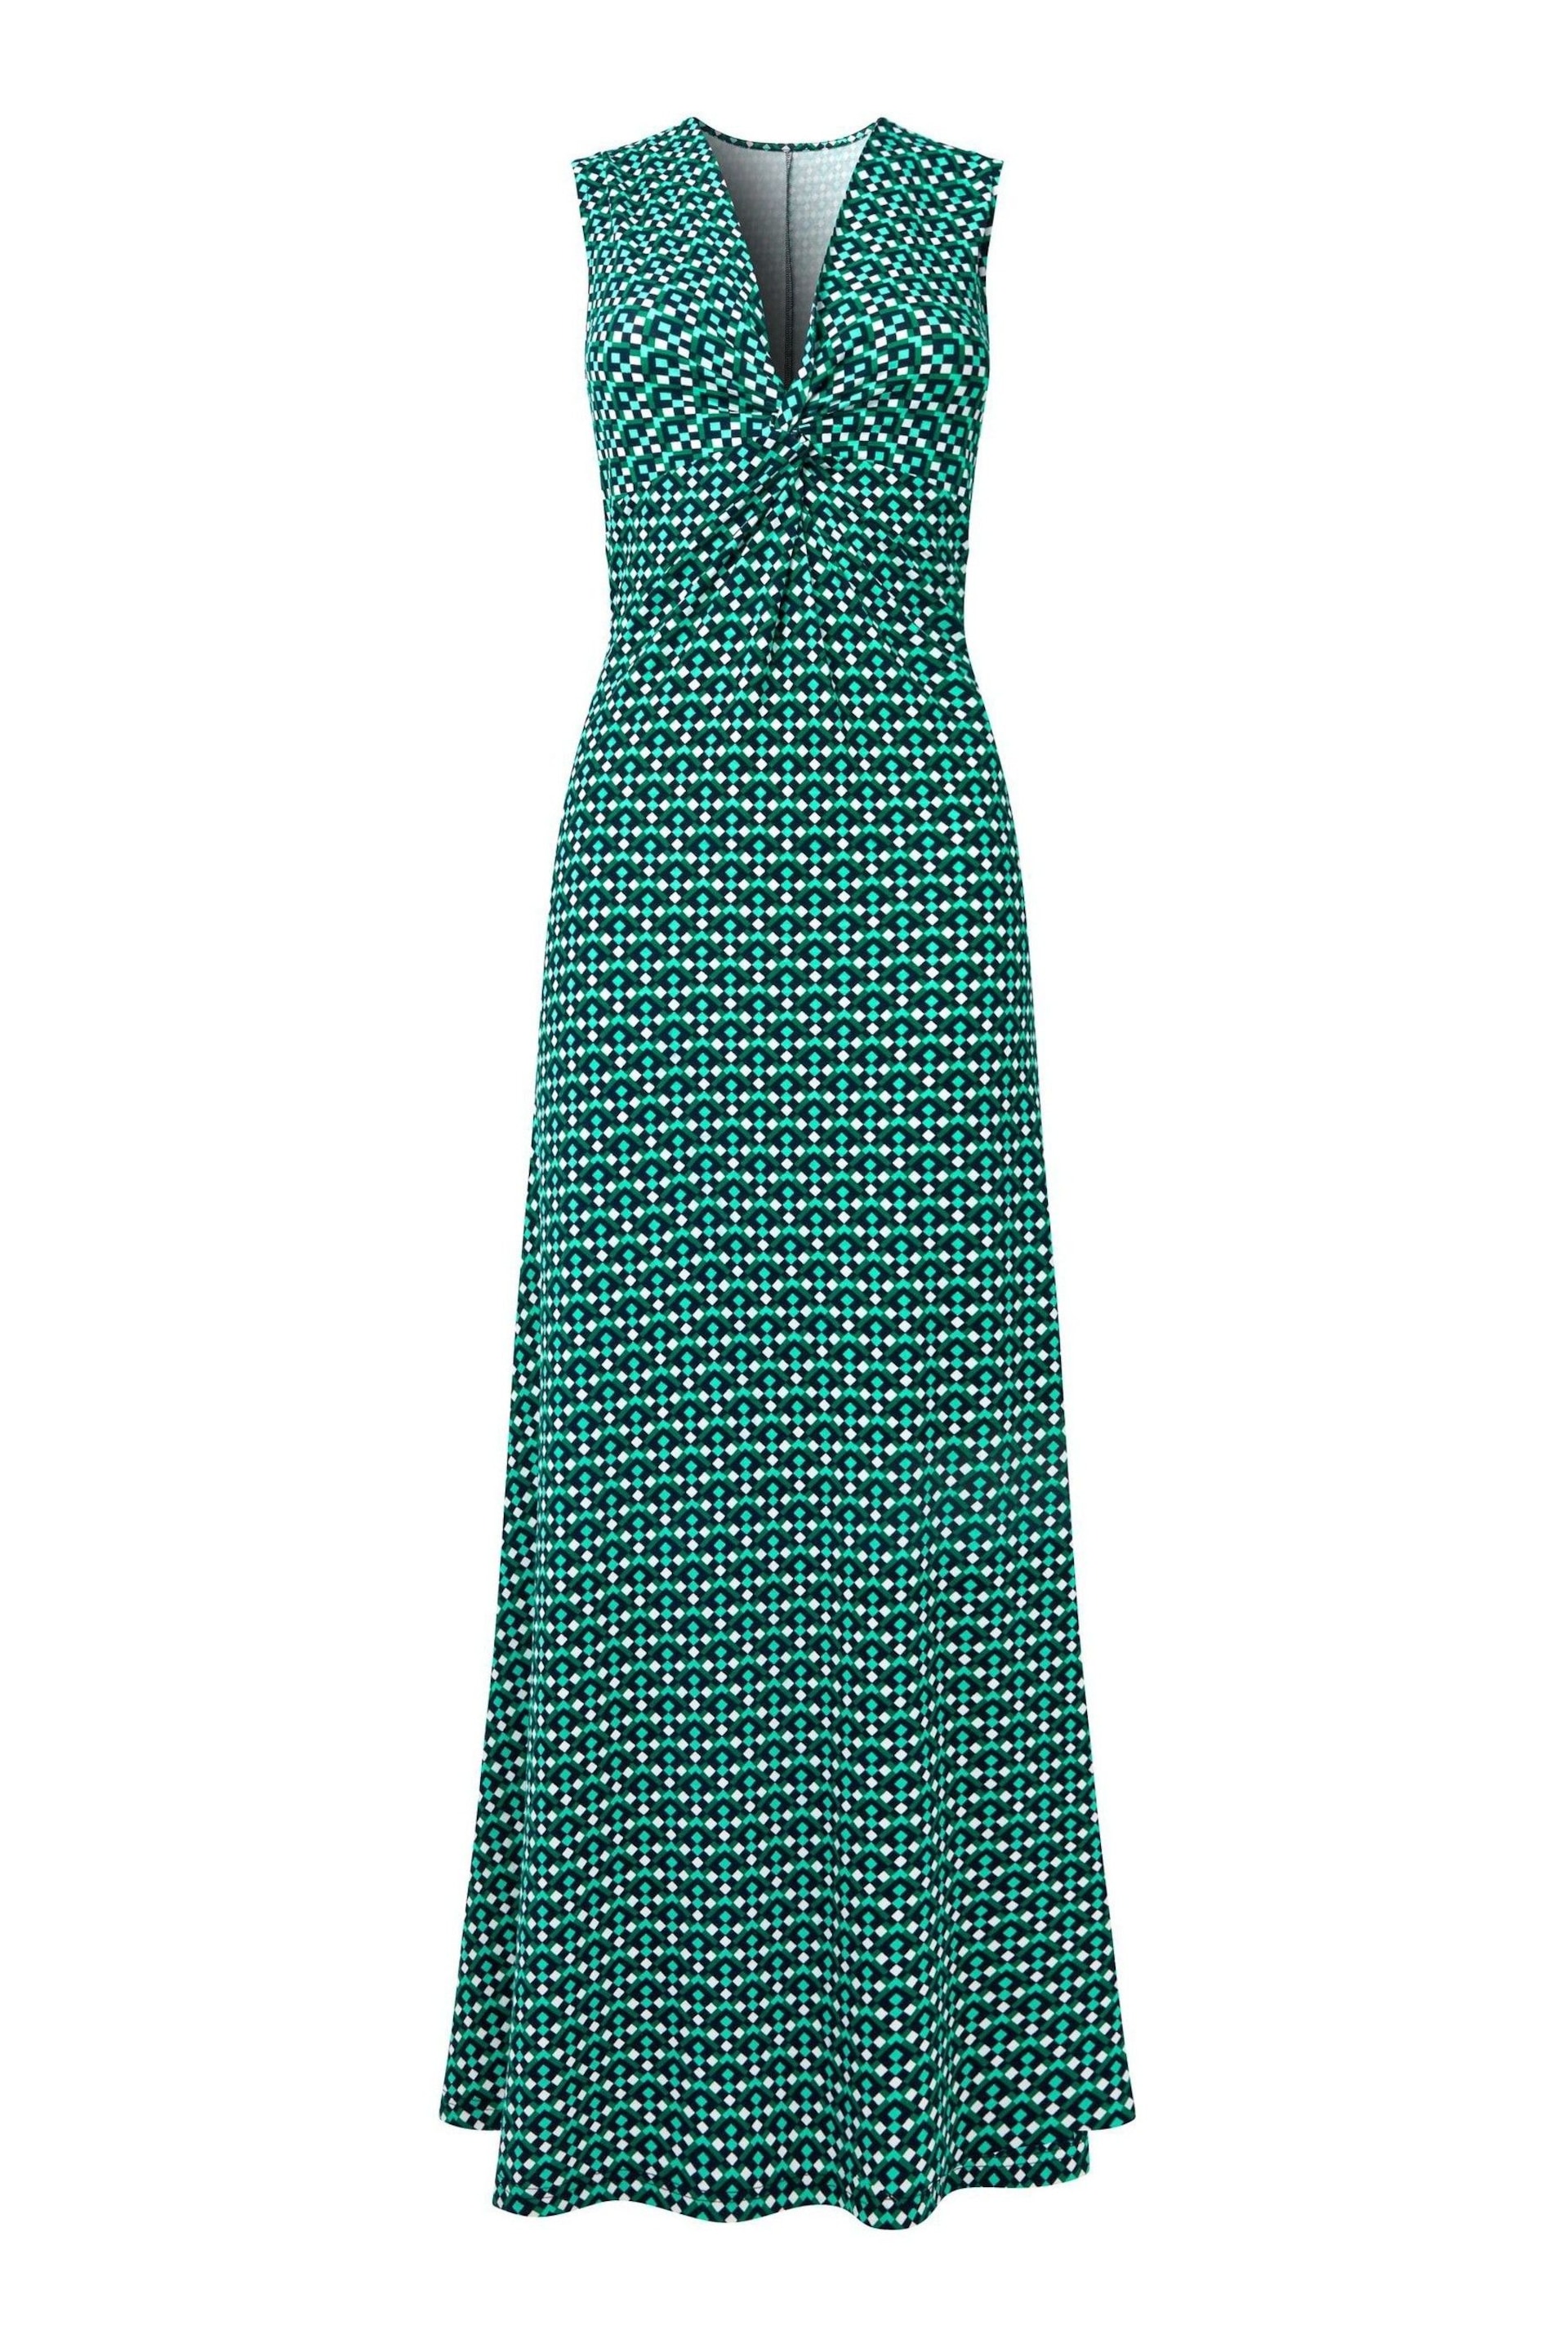 Joe Browns Green Geo Print Twist Front Jersey Maxi Dress - Image 5 of 5